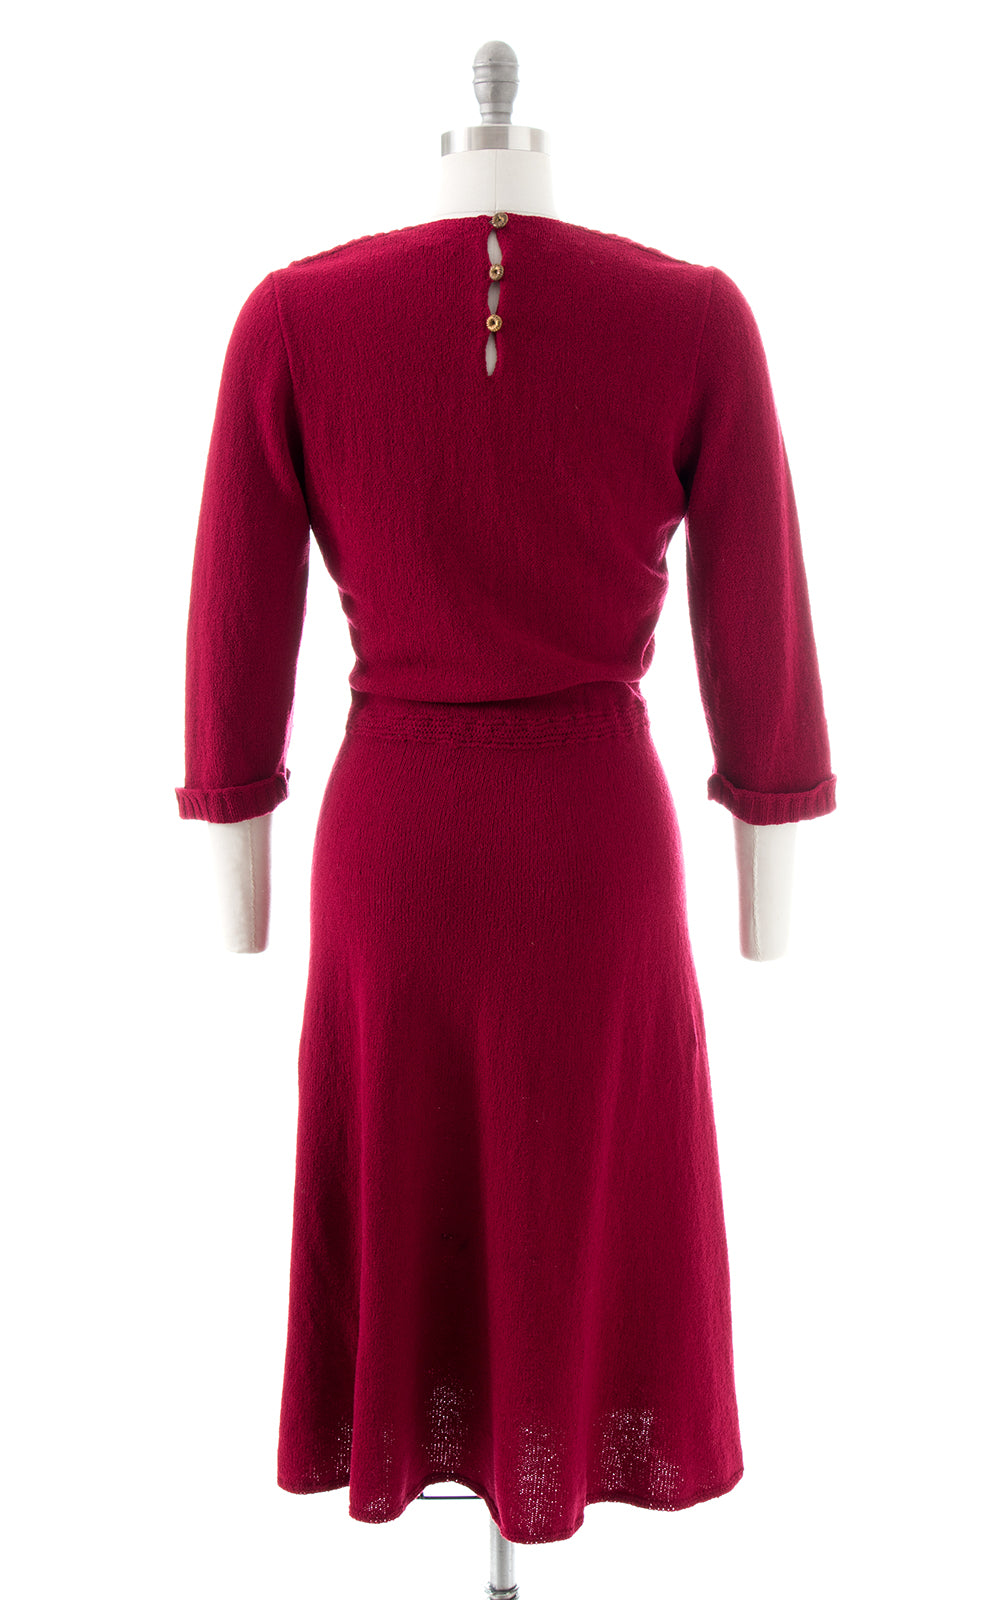 1950s Burgundy Knit Wool Sweater Dress